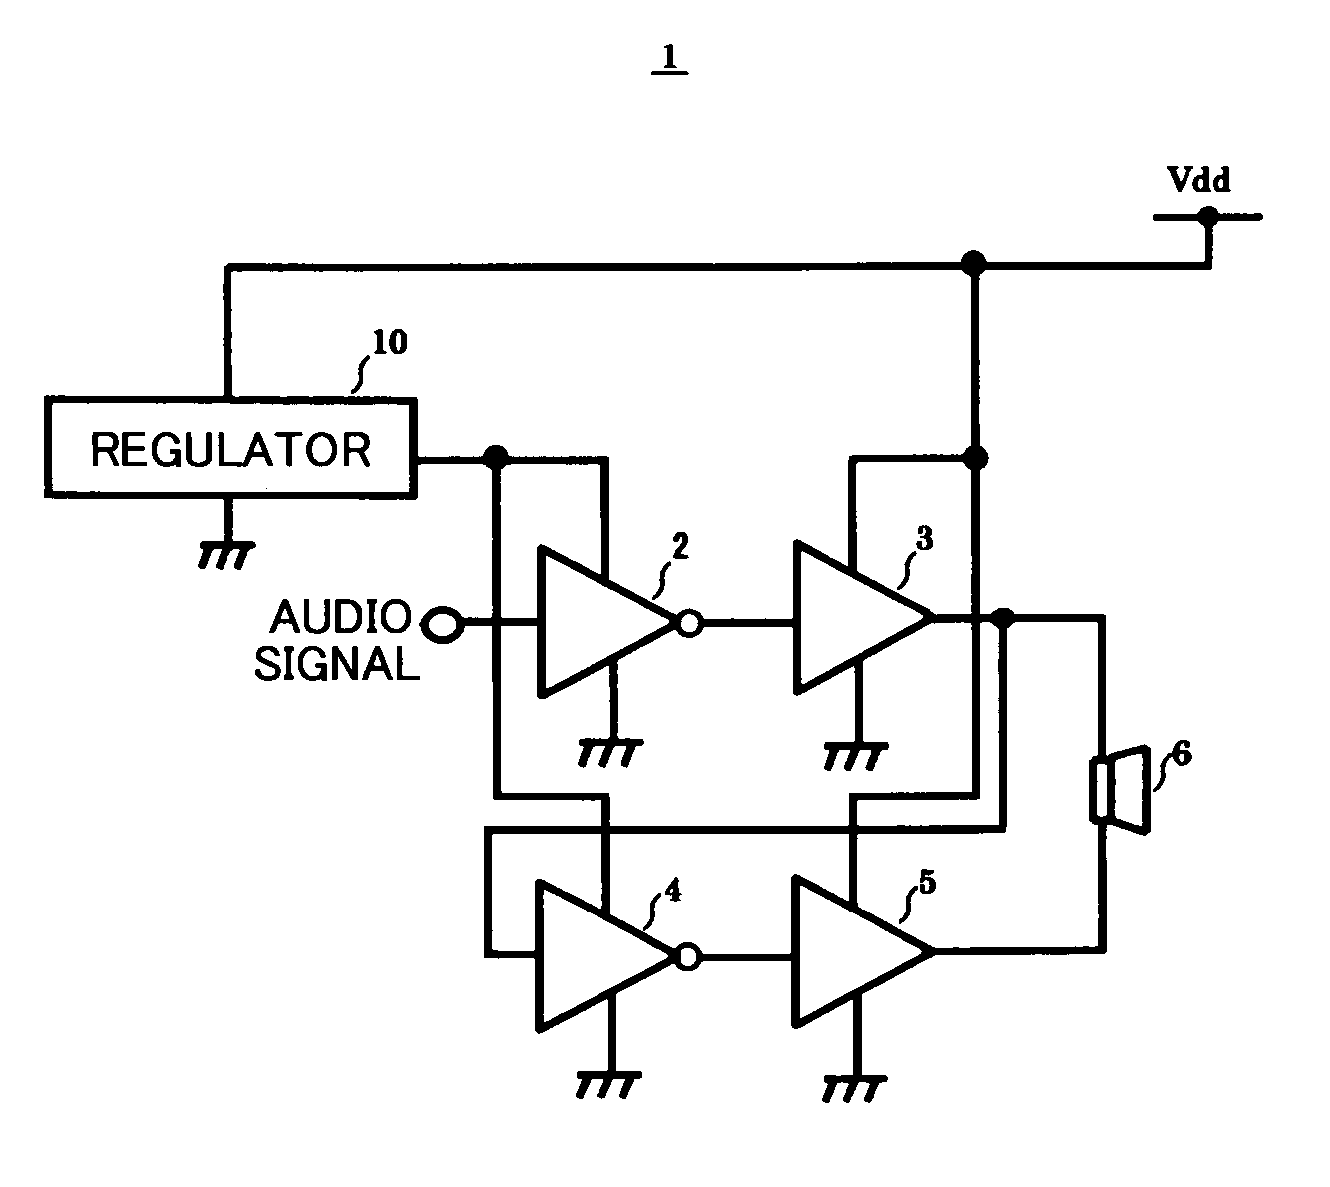 Audio signal output device